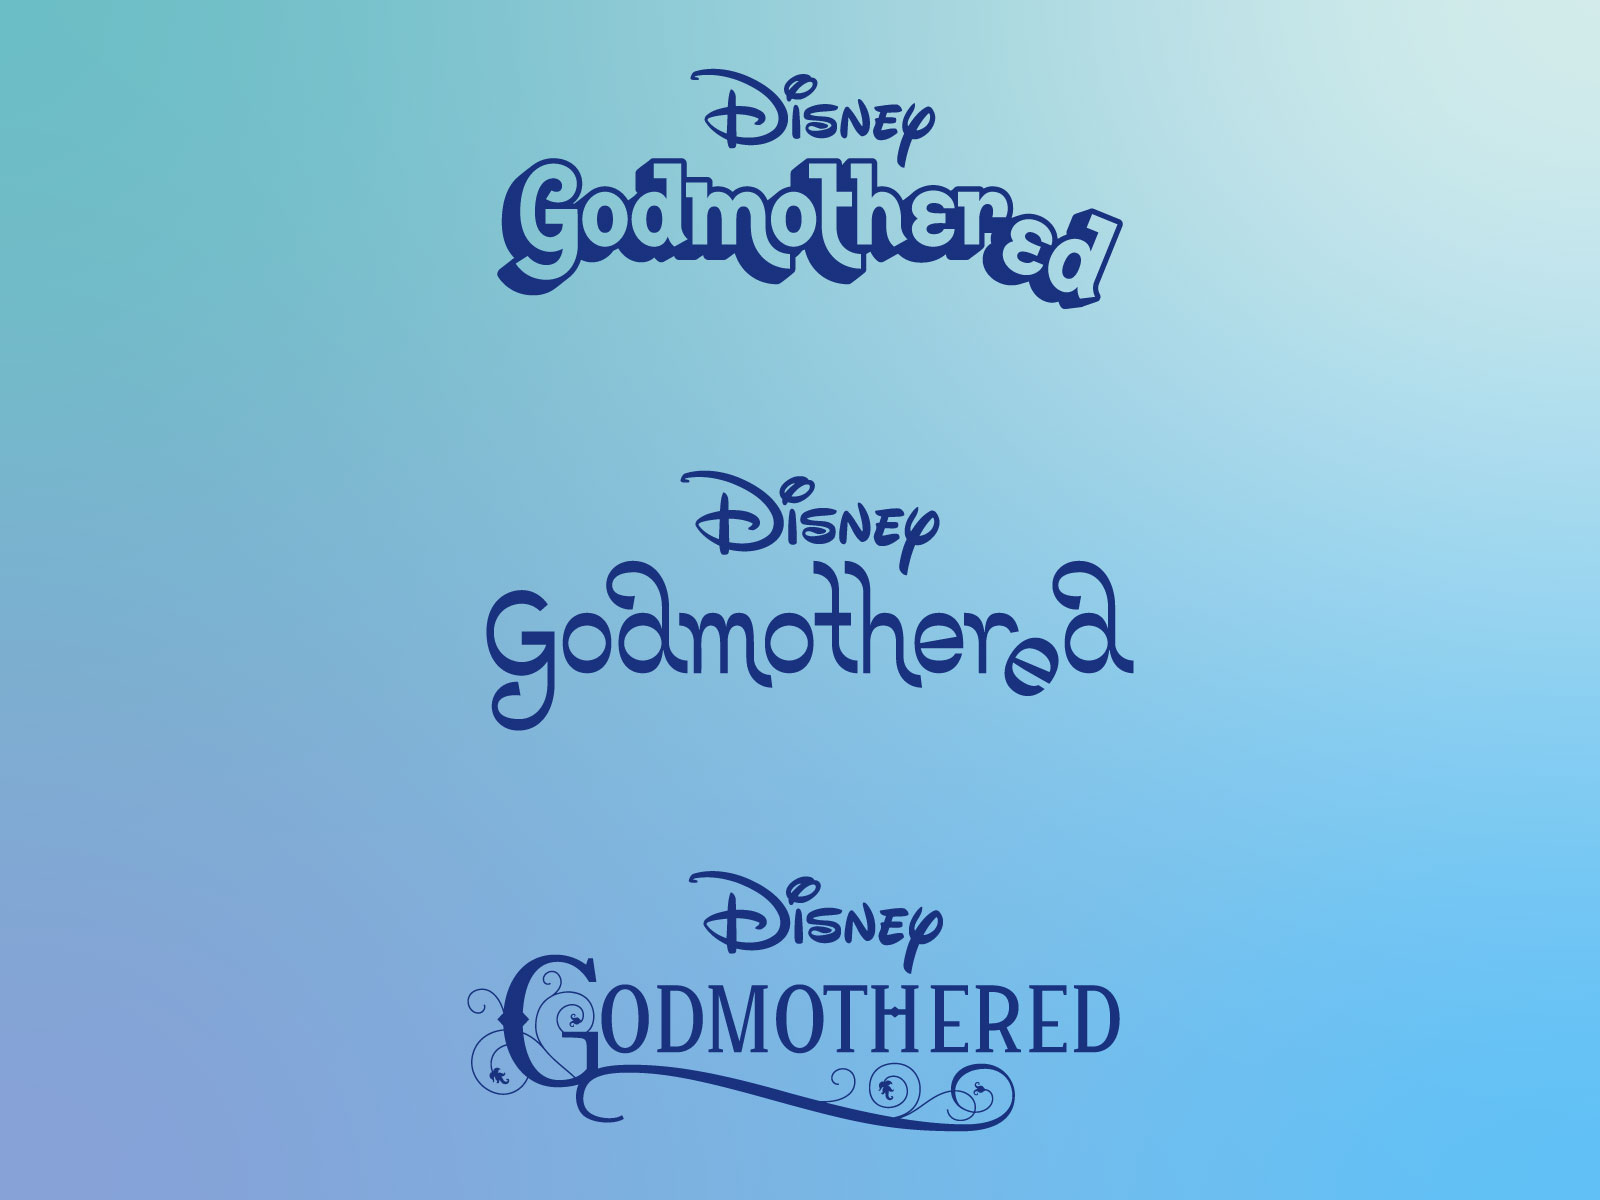 Disneys Godmothered Unchosen Movie Title Treatments By Hoodzpah On Dribbble 